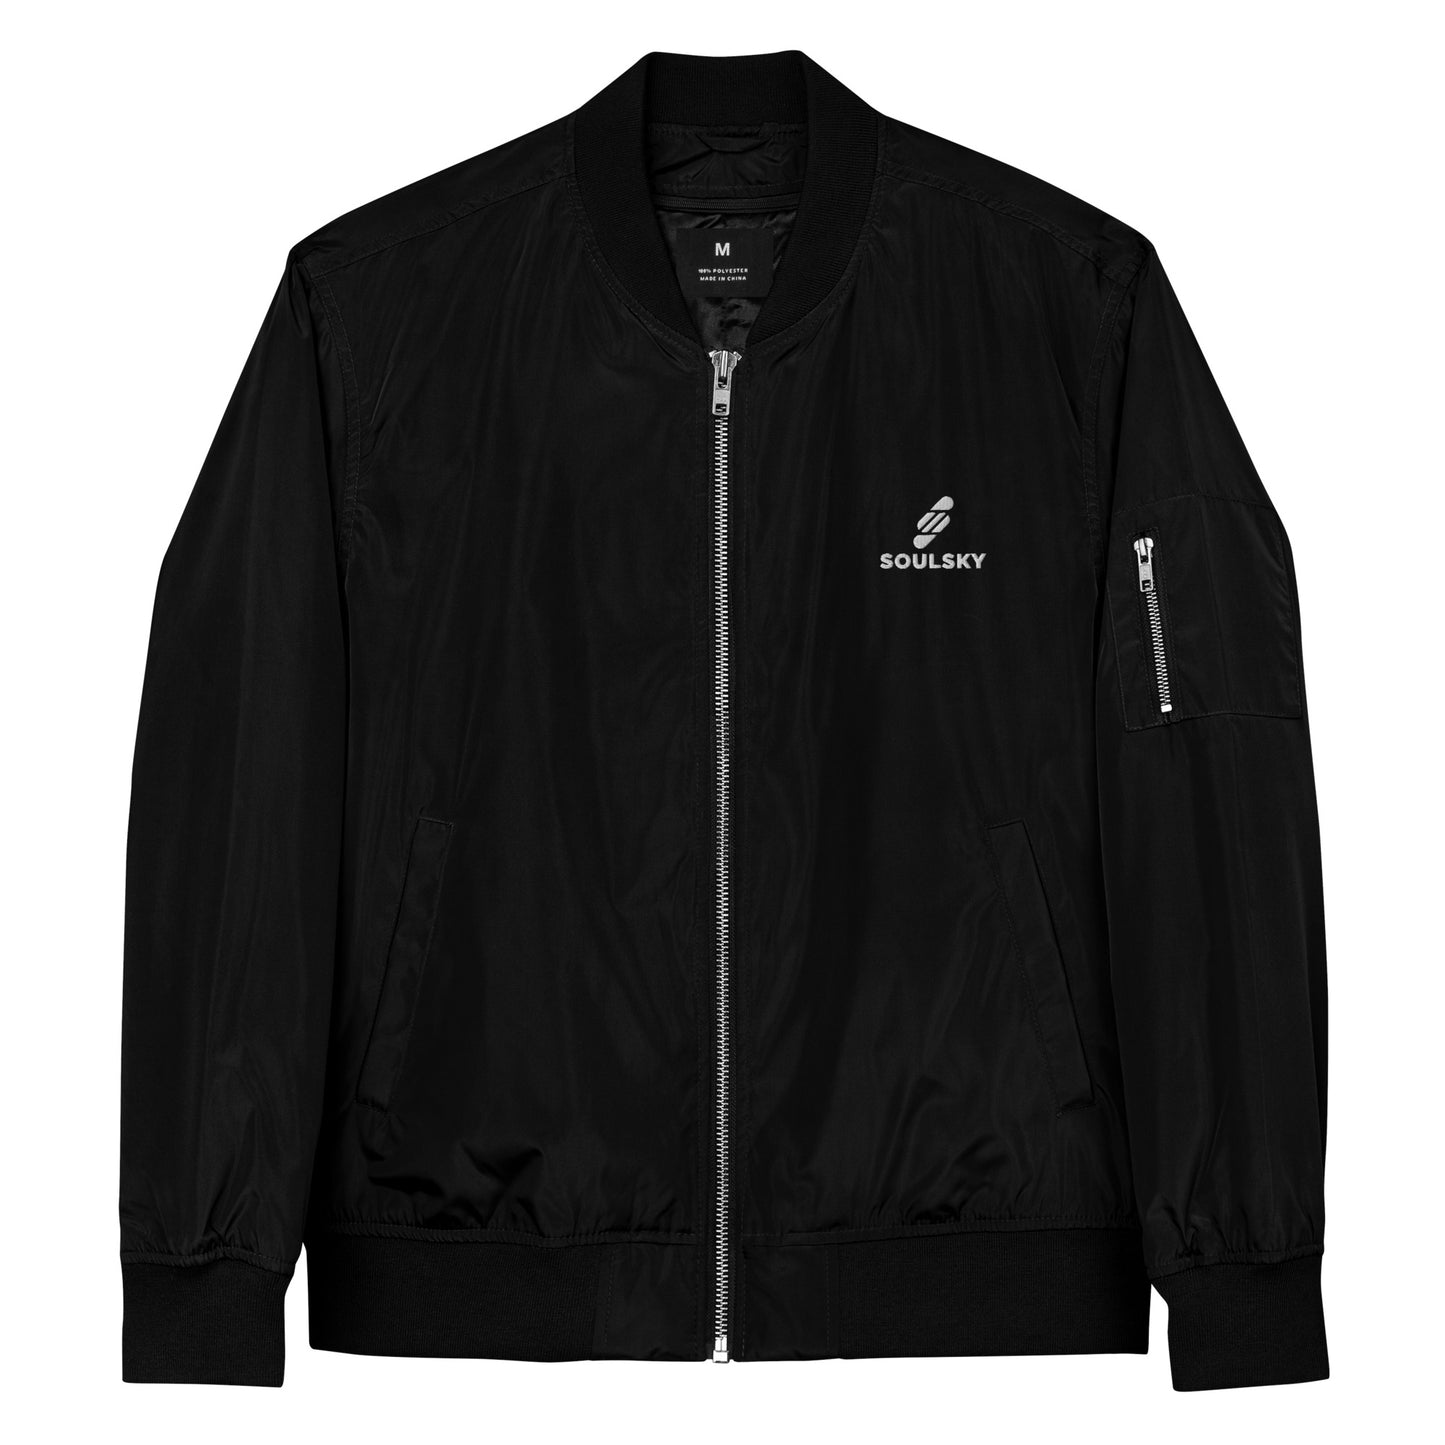 GIFTED Premium Bomber Jacket